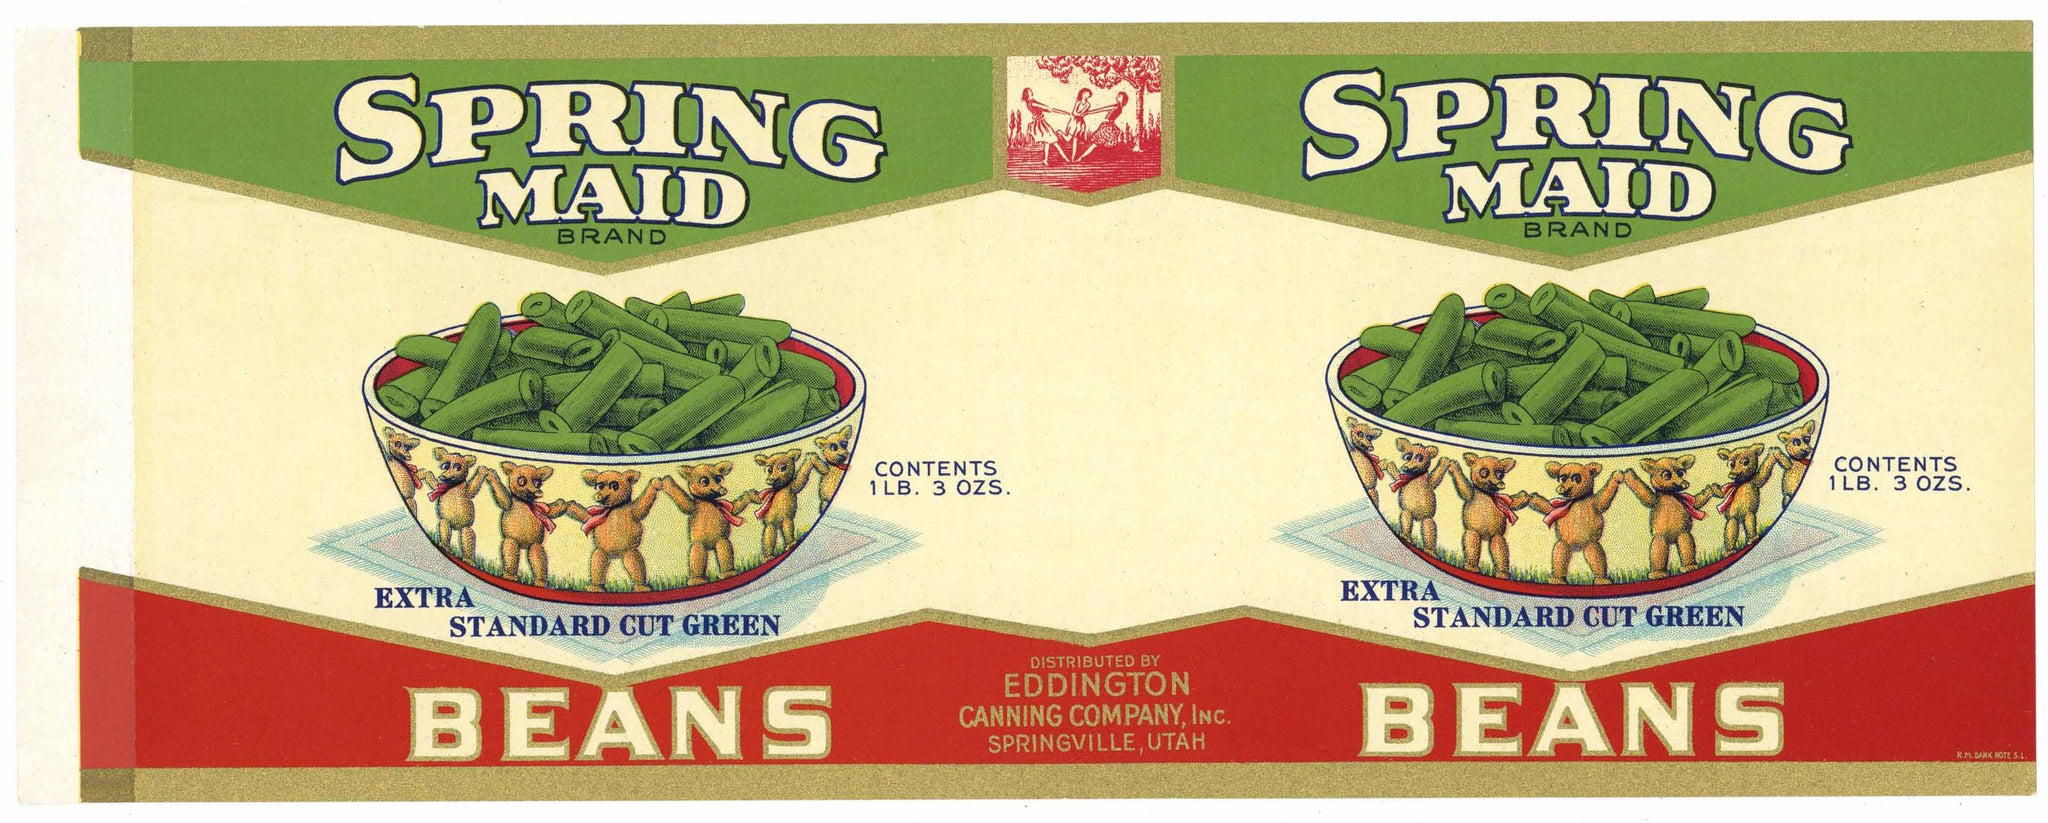 Spring Maid Brand Vintage Springville Utah Bean Can Label